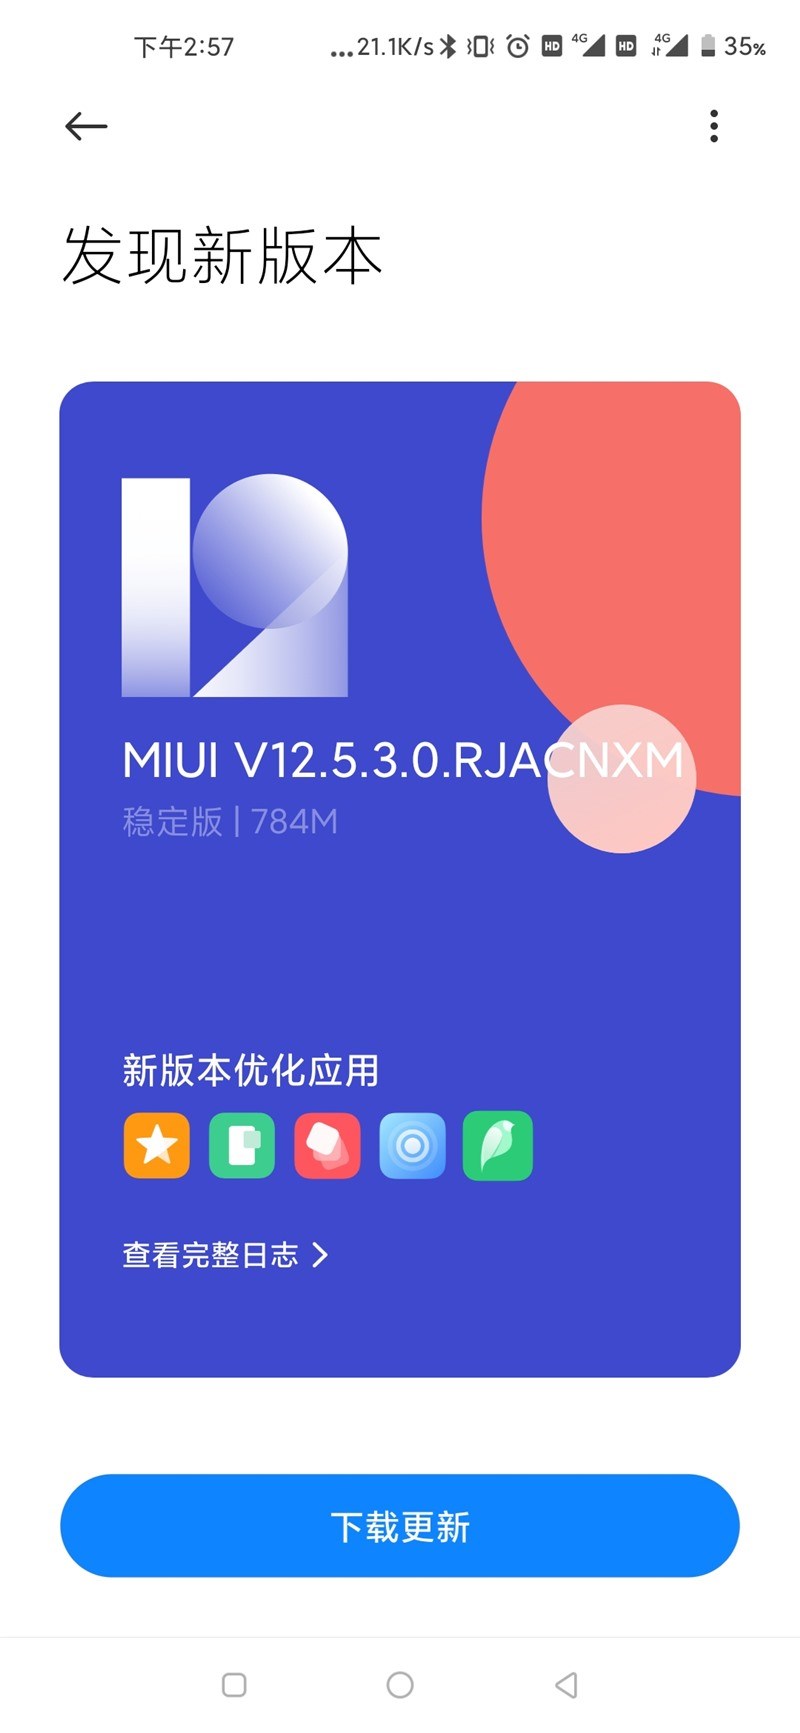 xiaomi mi 10 pro receives miui 12.5 stable update in china